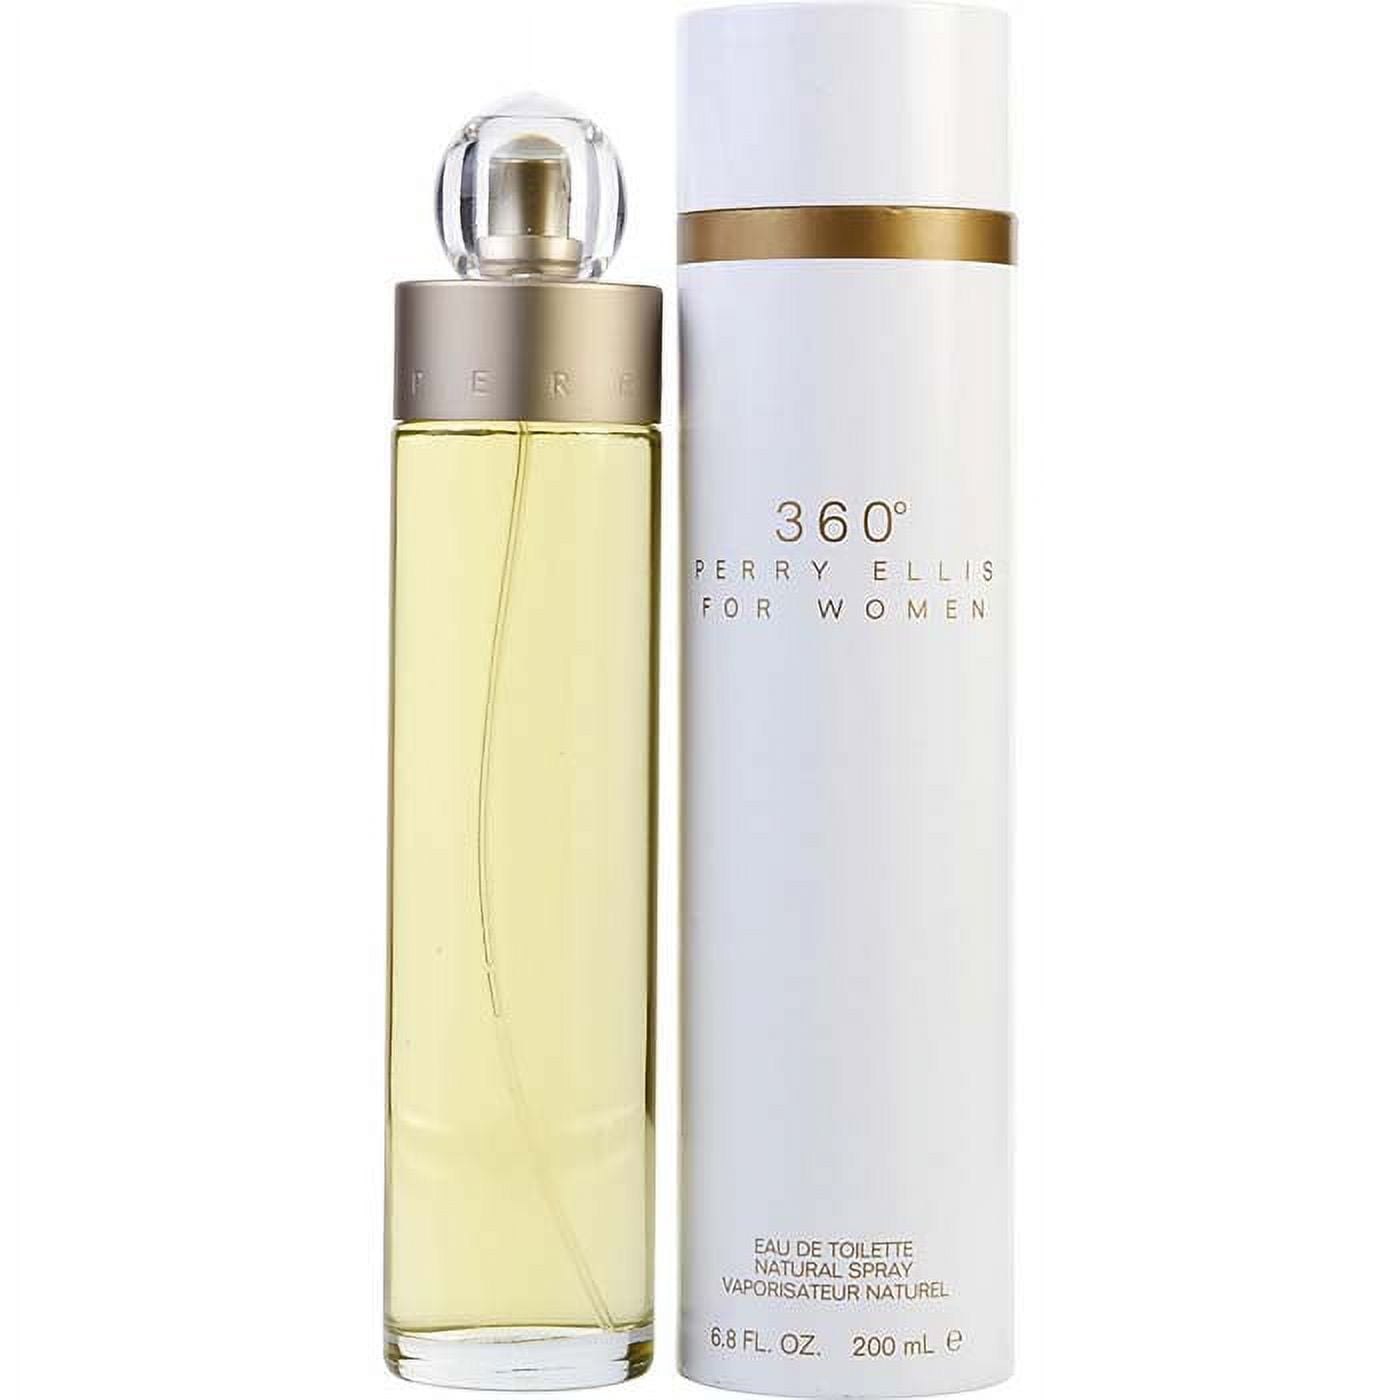 Perry Ellis Cobalt Perry Ellis cologne - a fragrance for men 2014